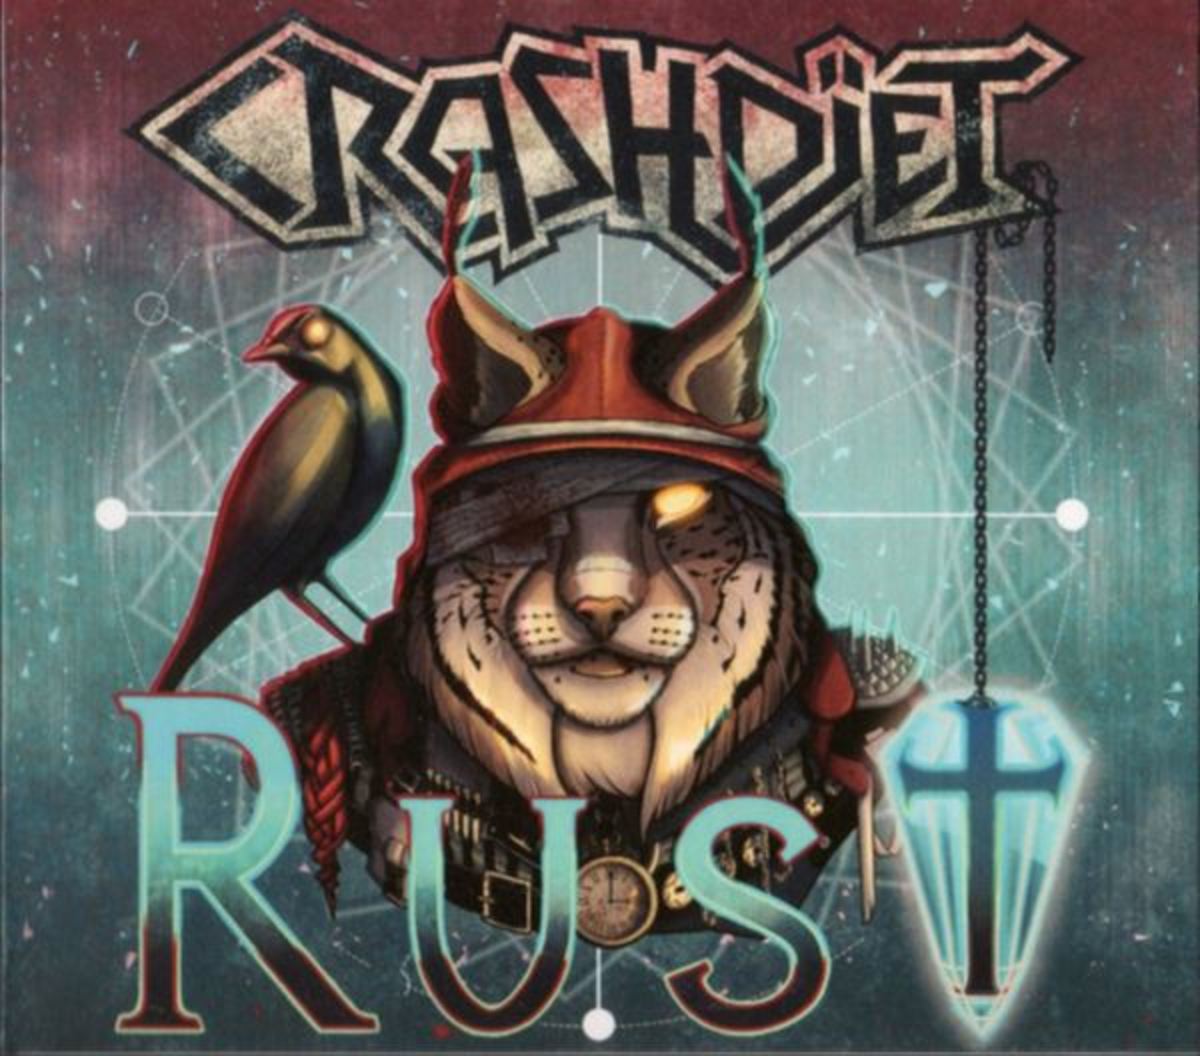 Crashdïet, "Rust" album cover